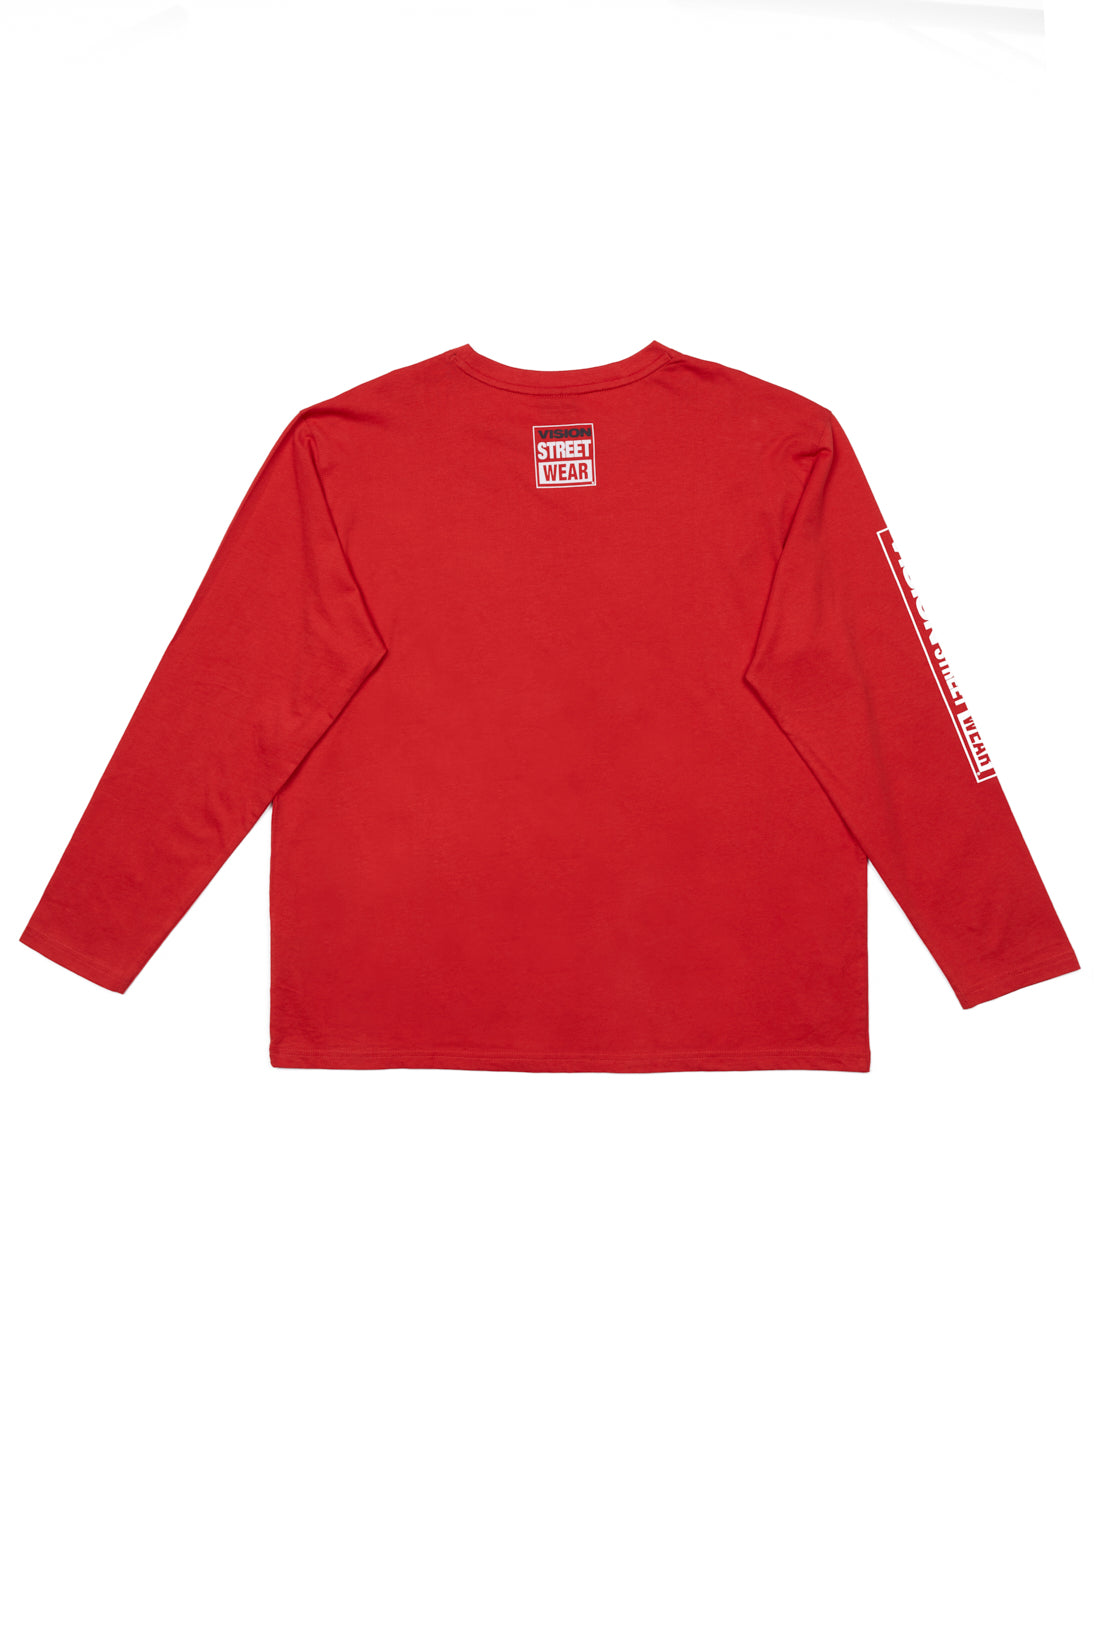 AOP Patch Pocket Tee Shirt - Red - DENIM SOCIETY™